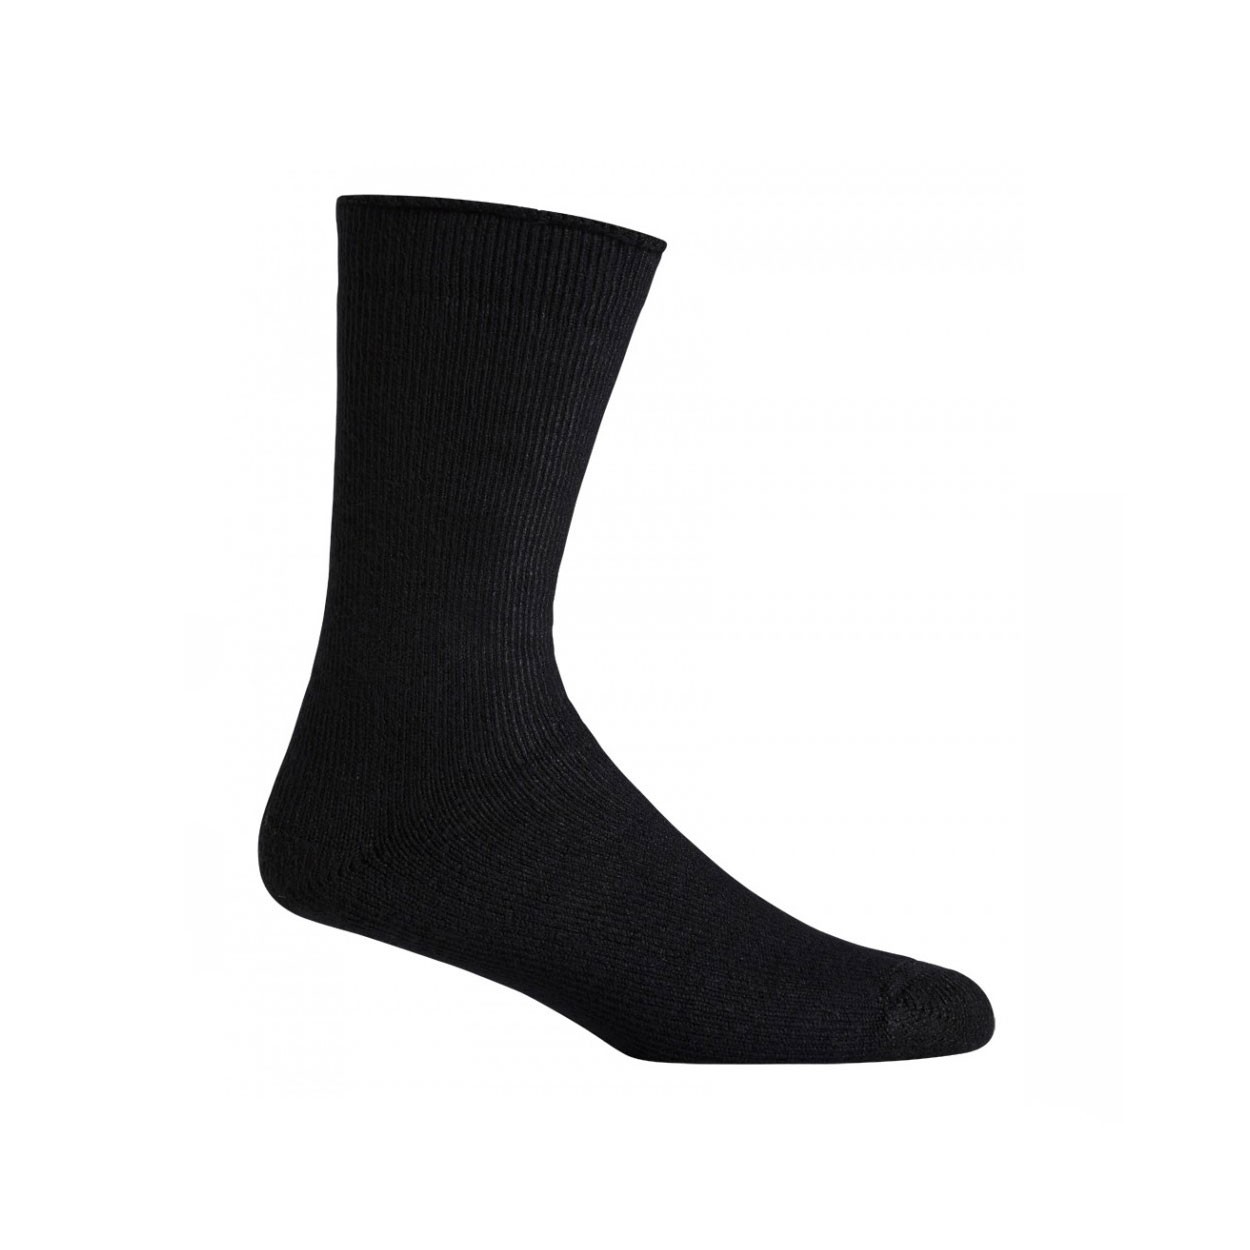 Product Details: Classic Socks Black (AB HZTC Tube Sock Striped Black)